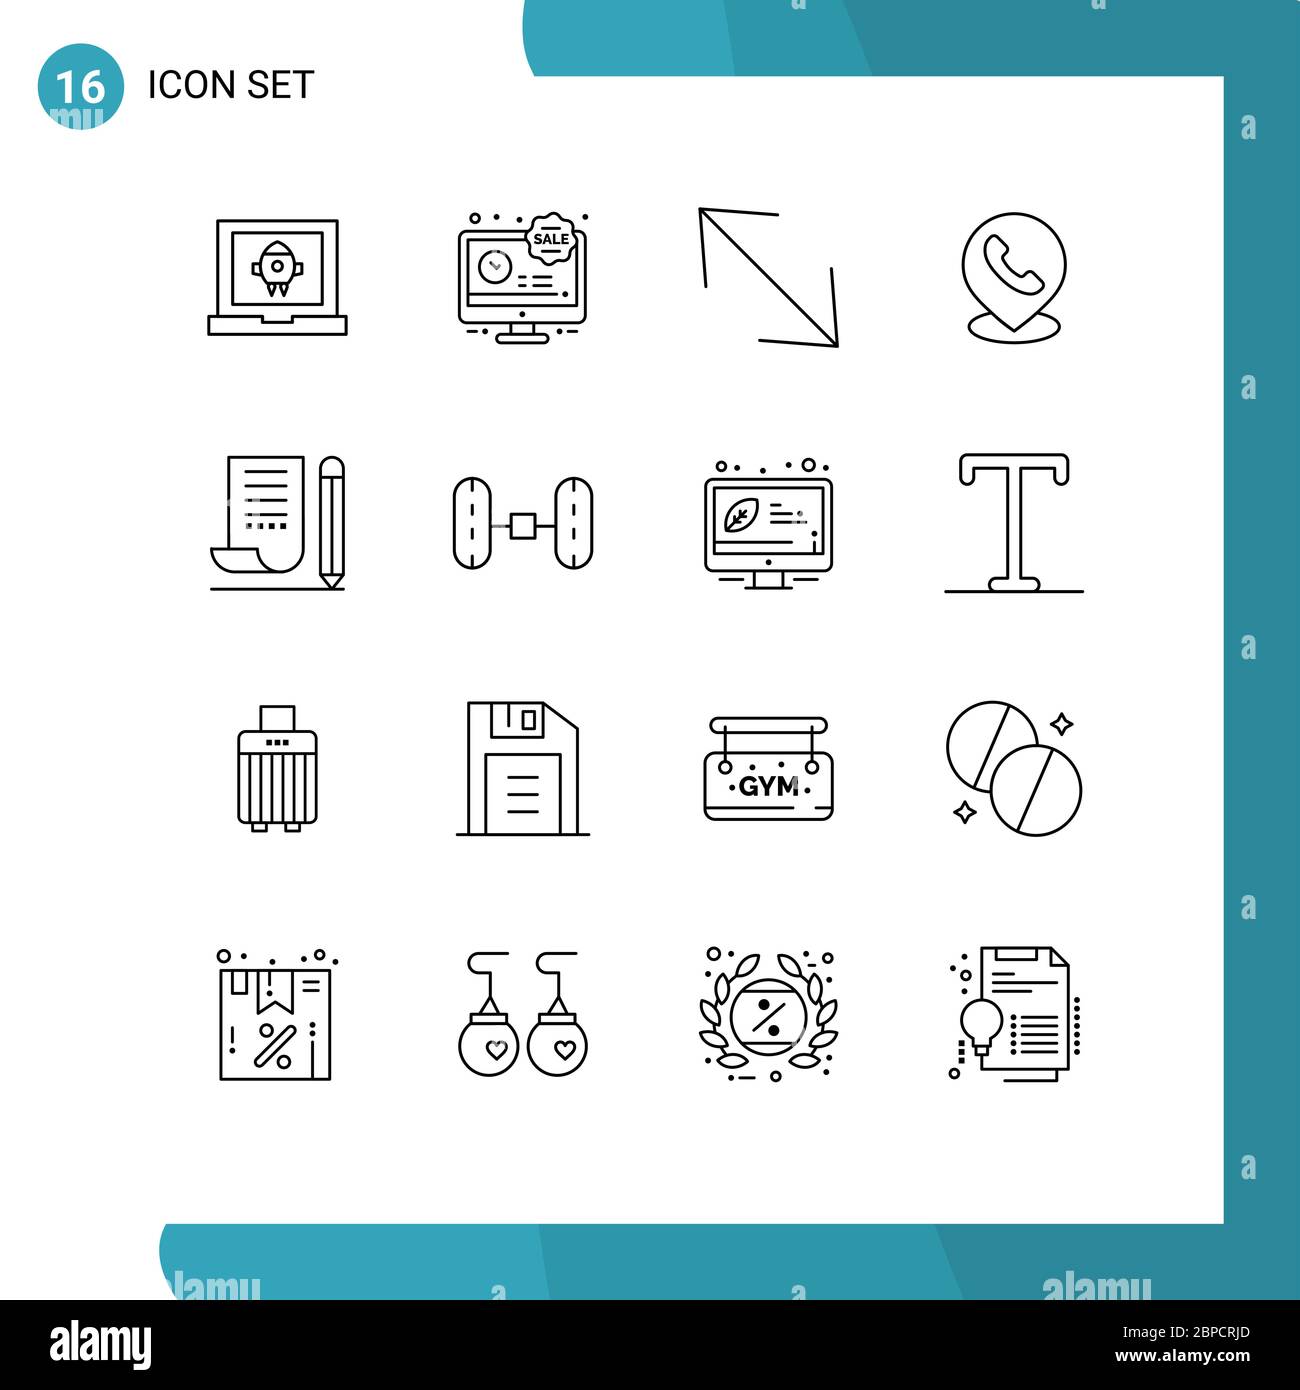 16 Universal Outline Signs Symbols of notebook, jotter, arrow, location, phone Editable Vector Design Elements Stock Vector